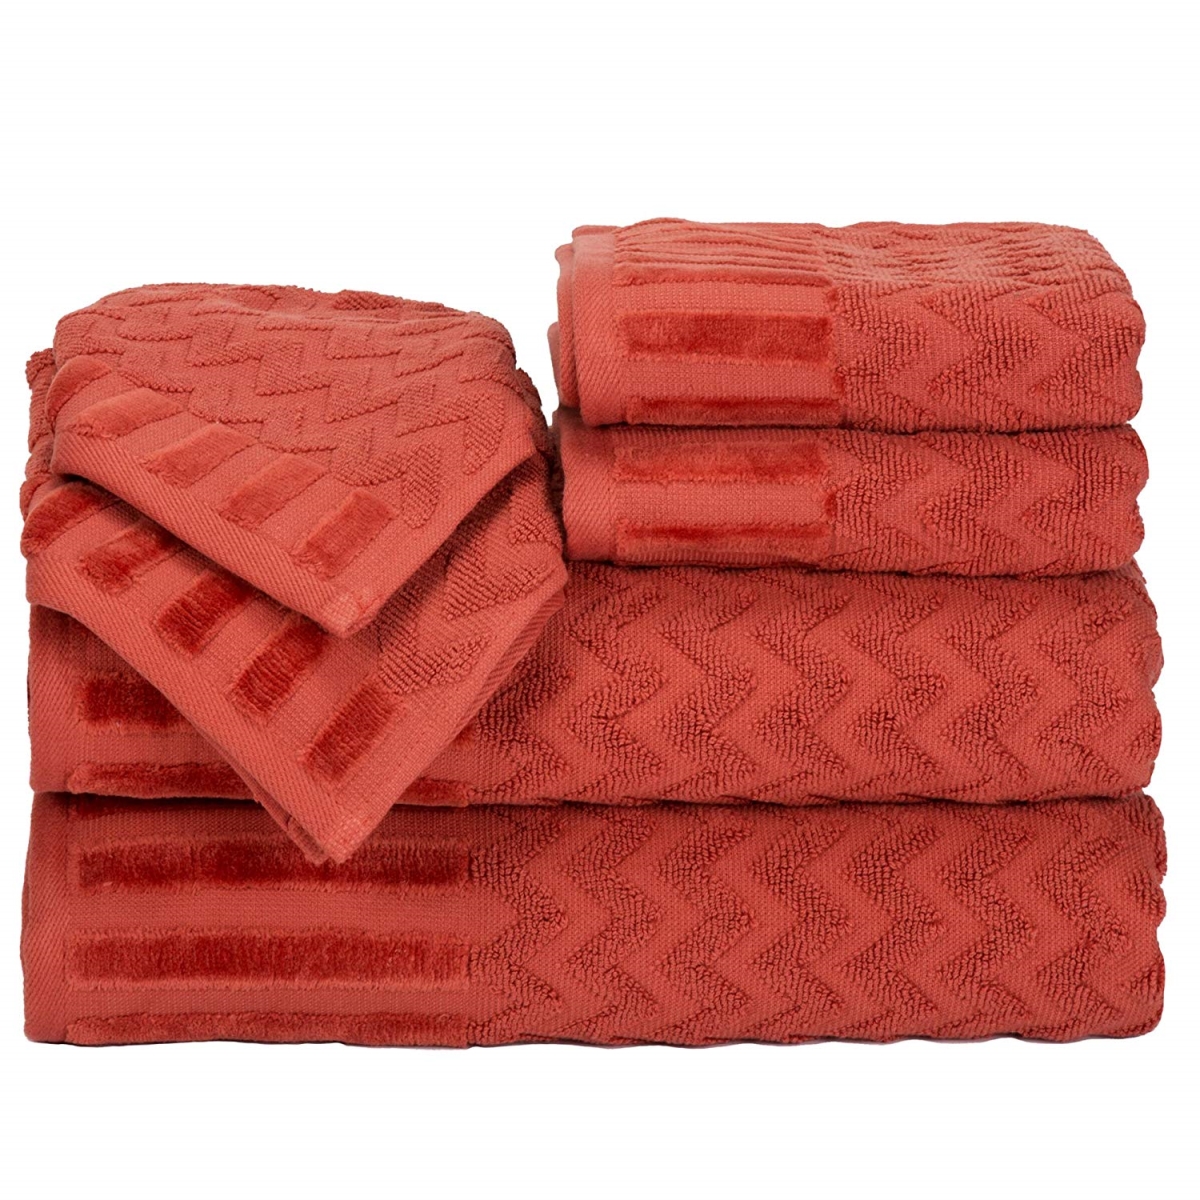 Picture of Bedford Home 67A-27551 6 Piece Cotton Deluxe Plush Bath Towel Set - Brick